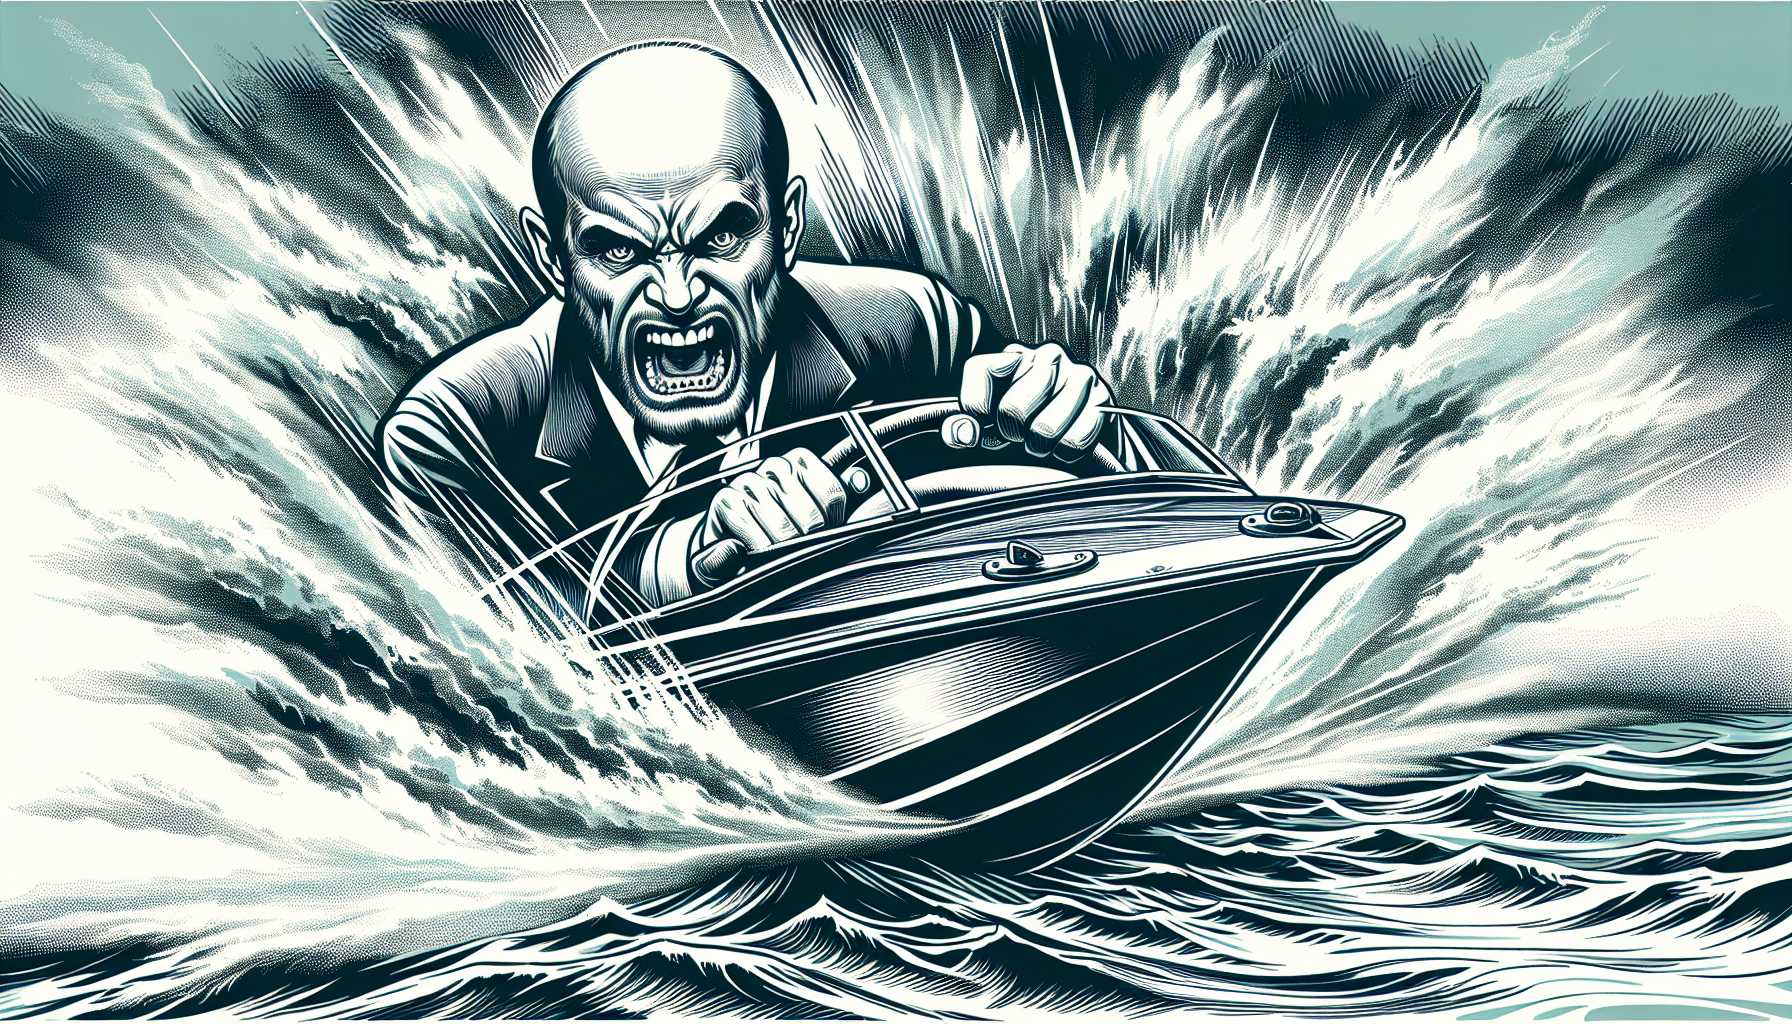 Angry bald dude Driving speed boat | TRAGIC crash